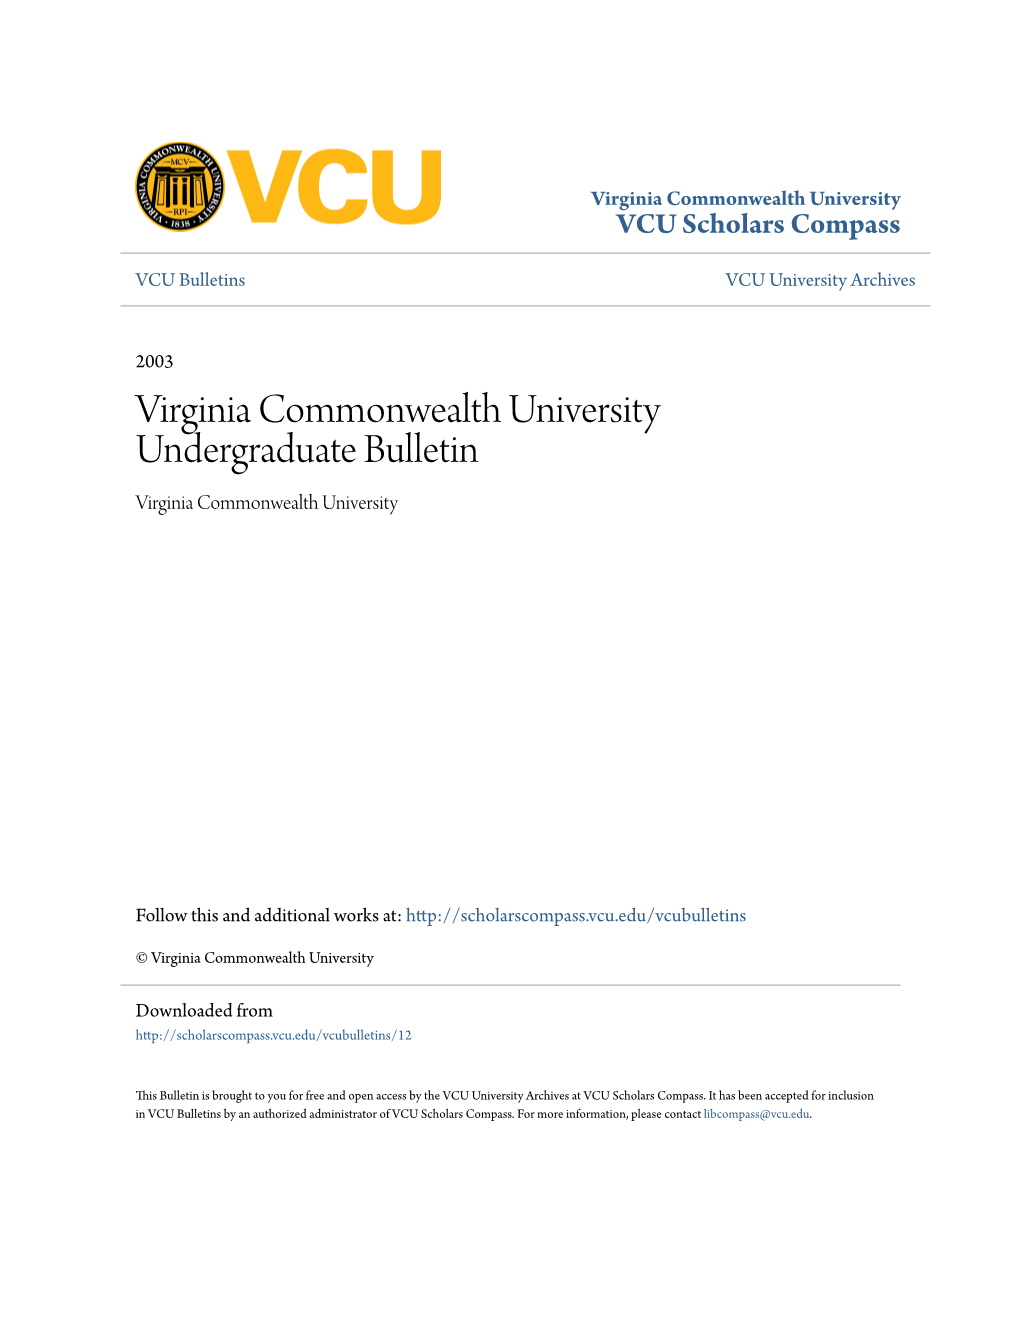 Virginia Commonwealth University Undergraduate Bulletin Virginia Commonwealth University